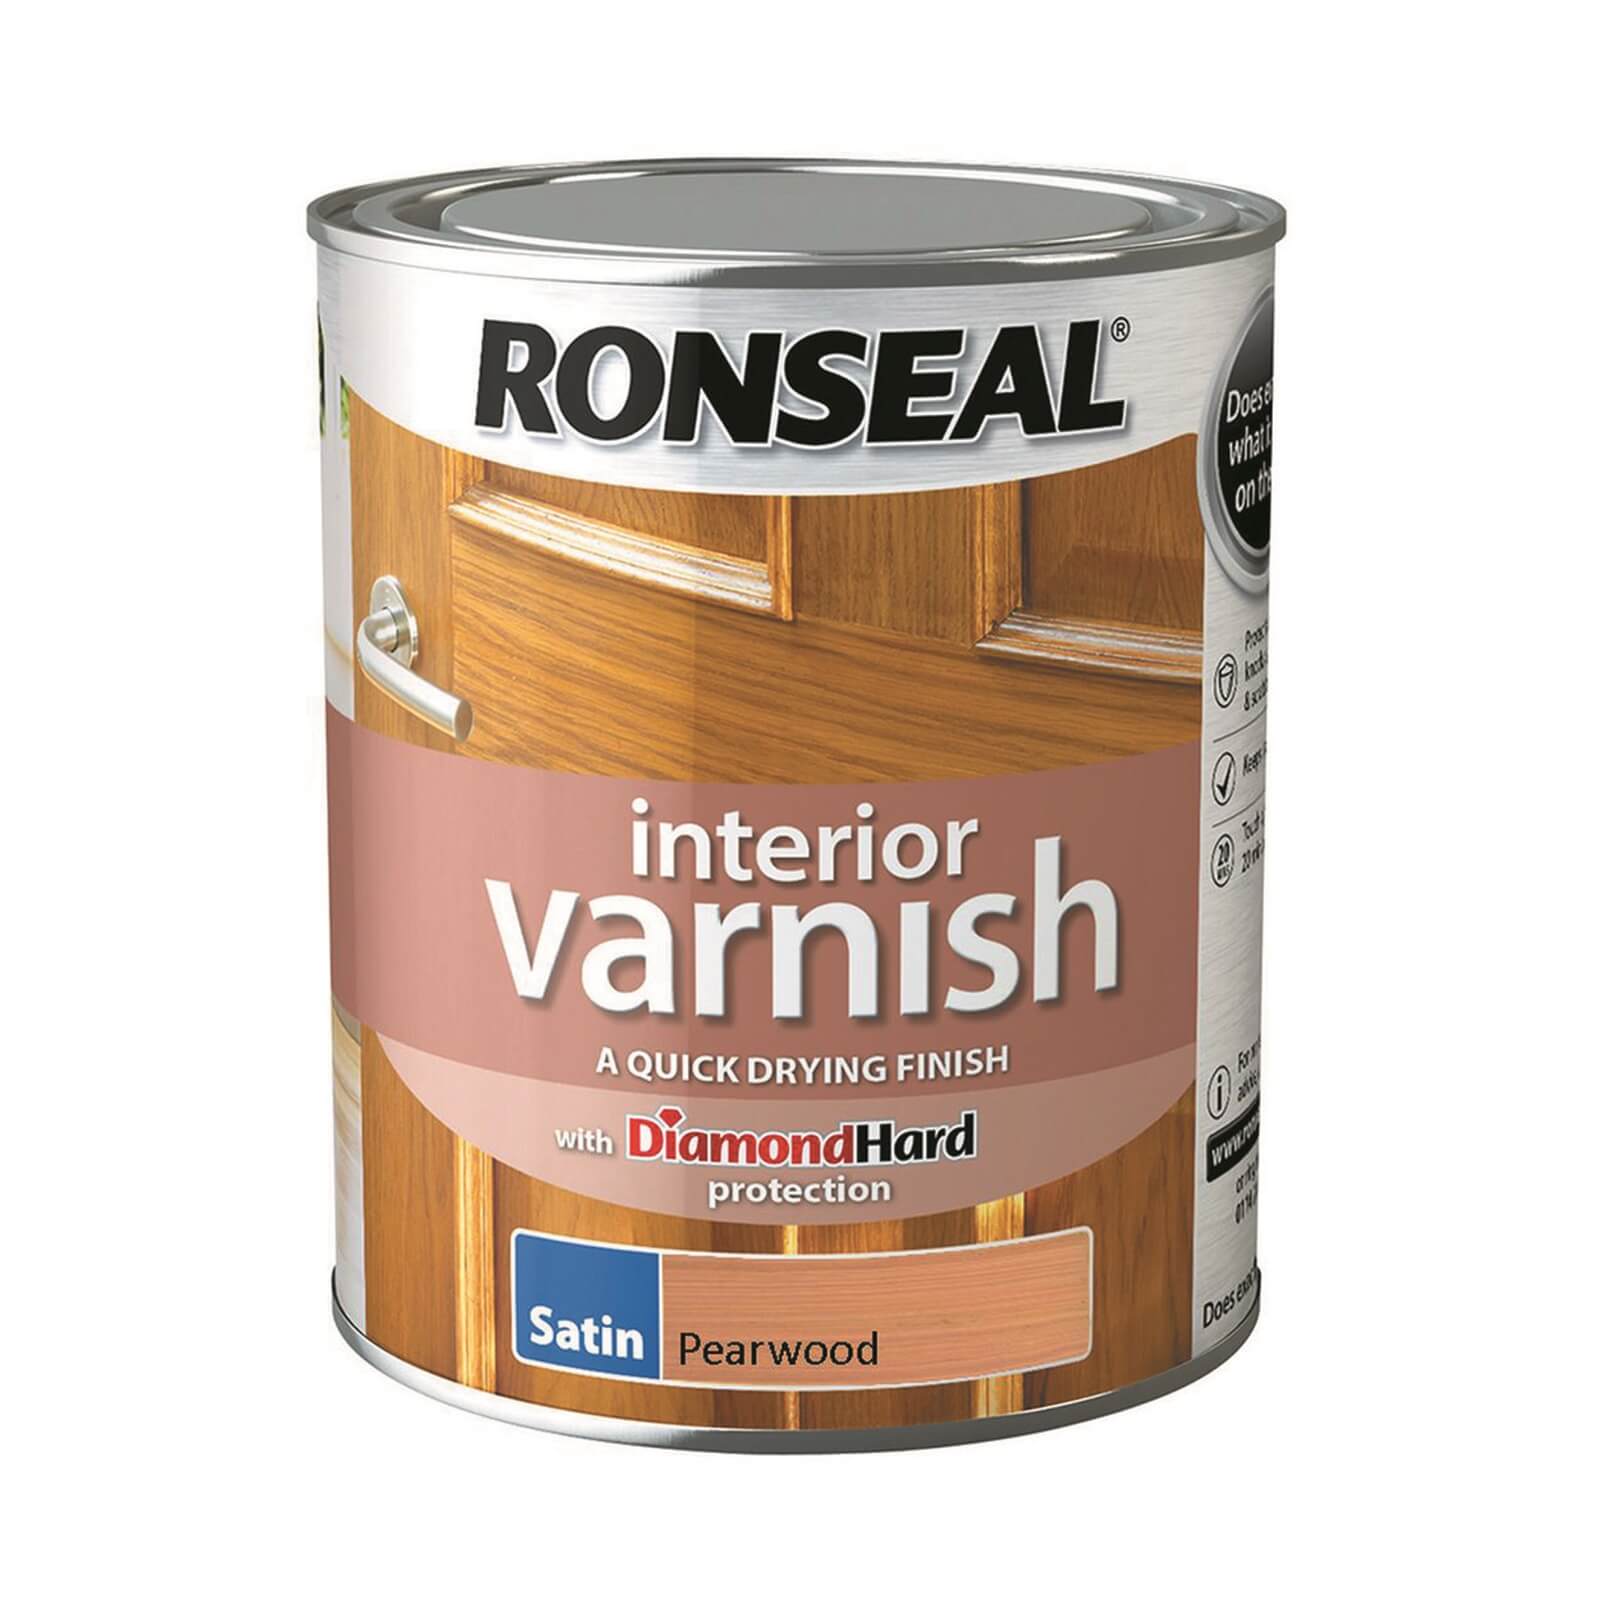 Photo of Ronseal Interior Varnish Satin Pearwood - 750ml